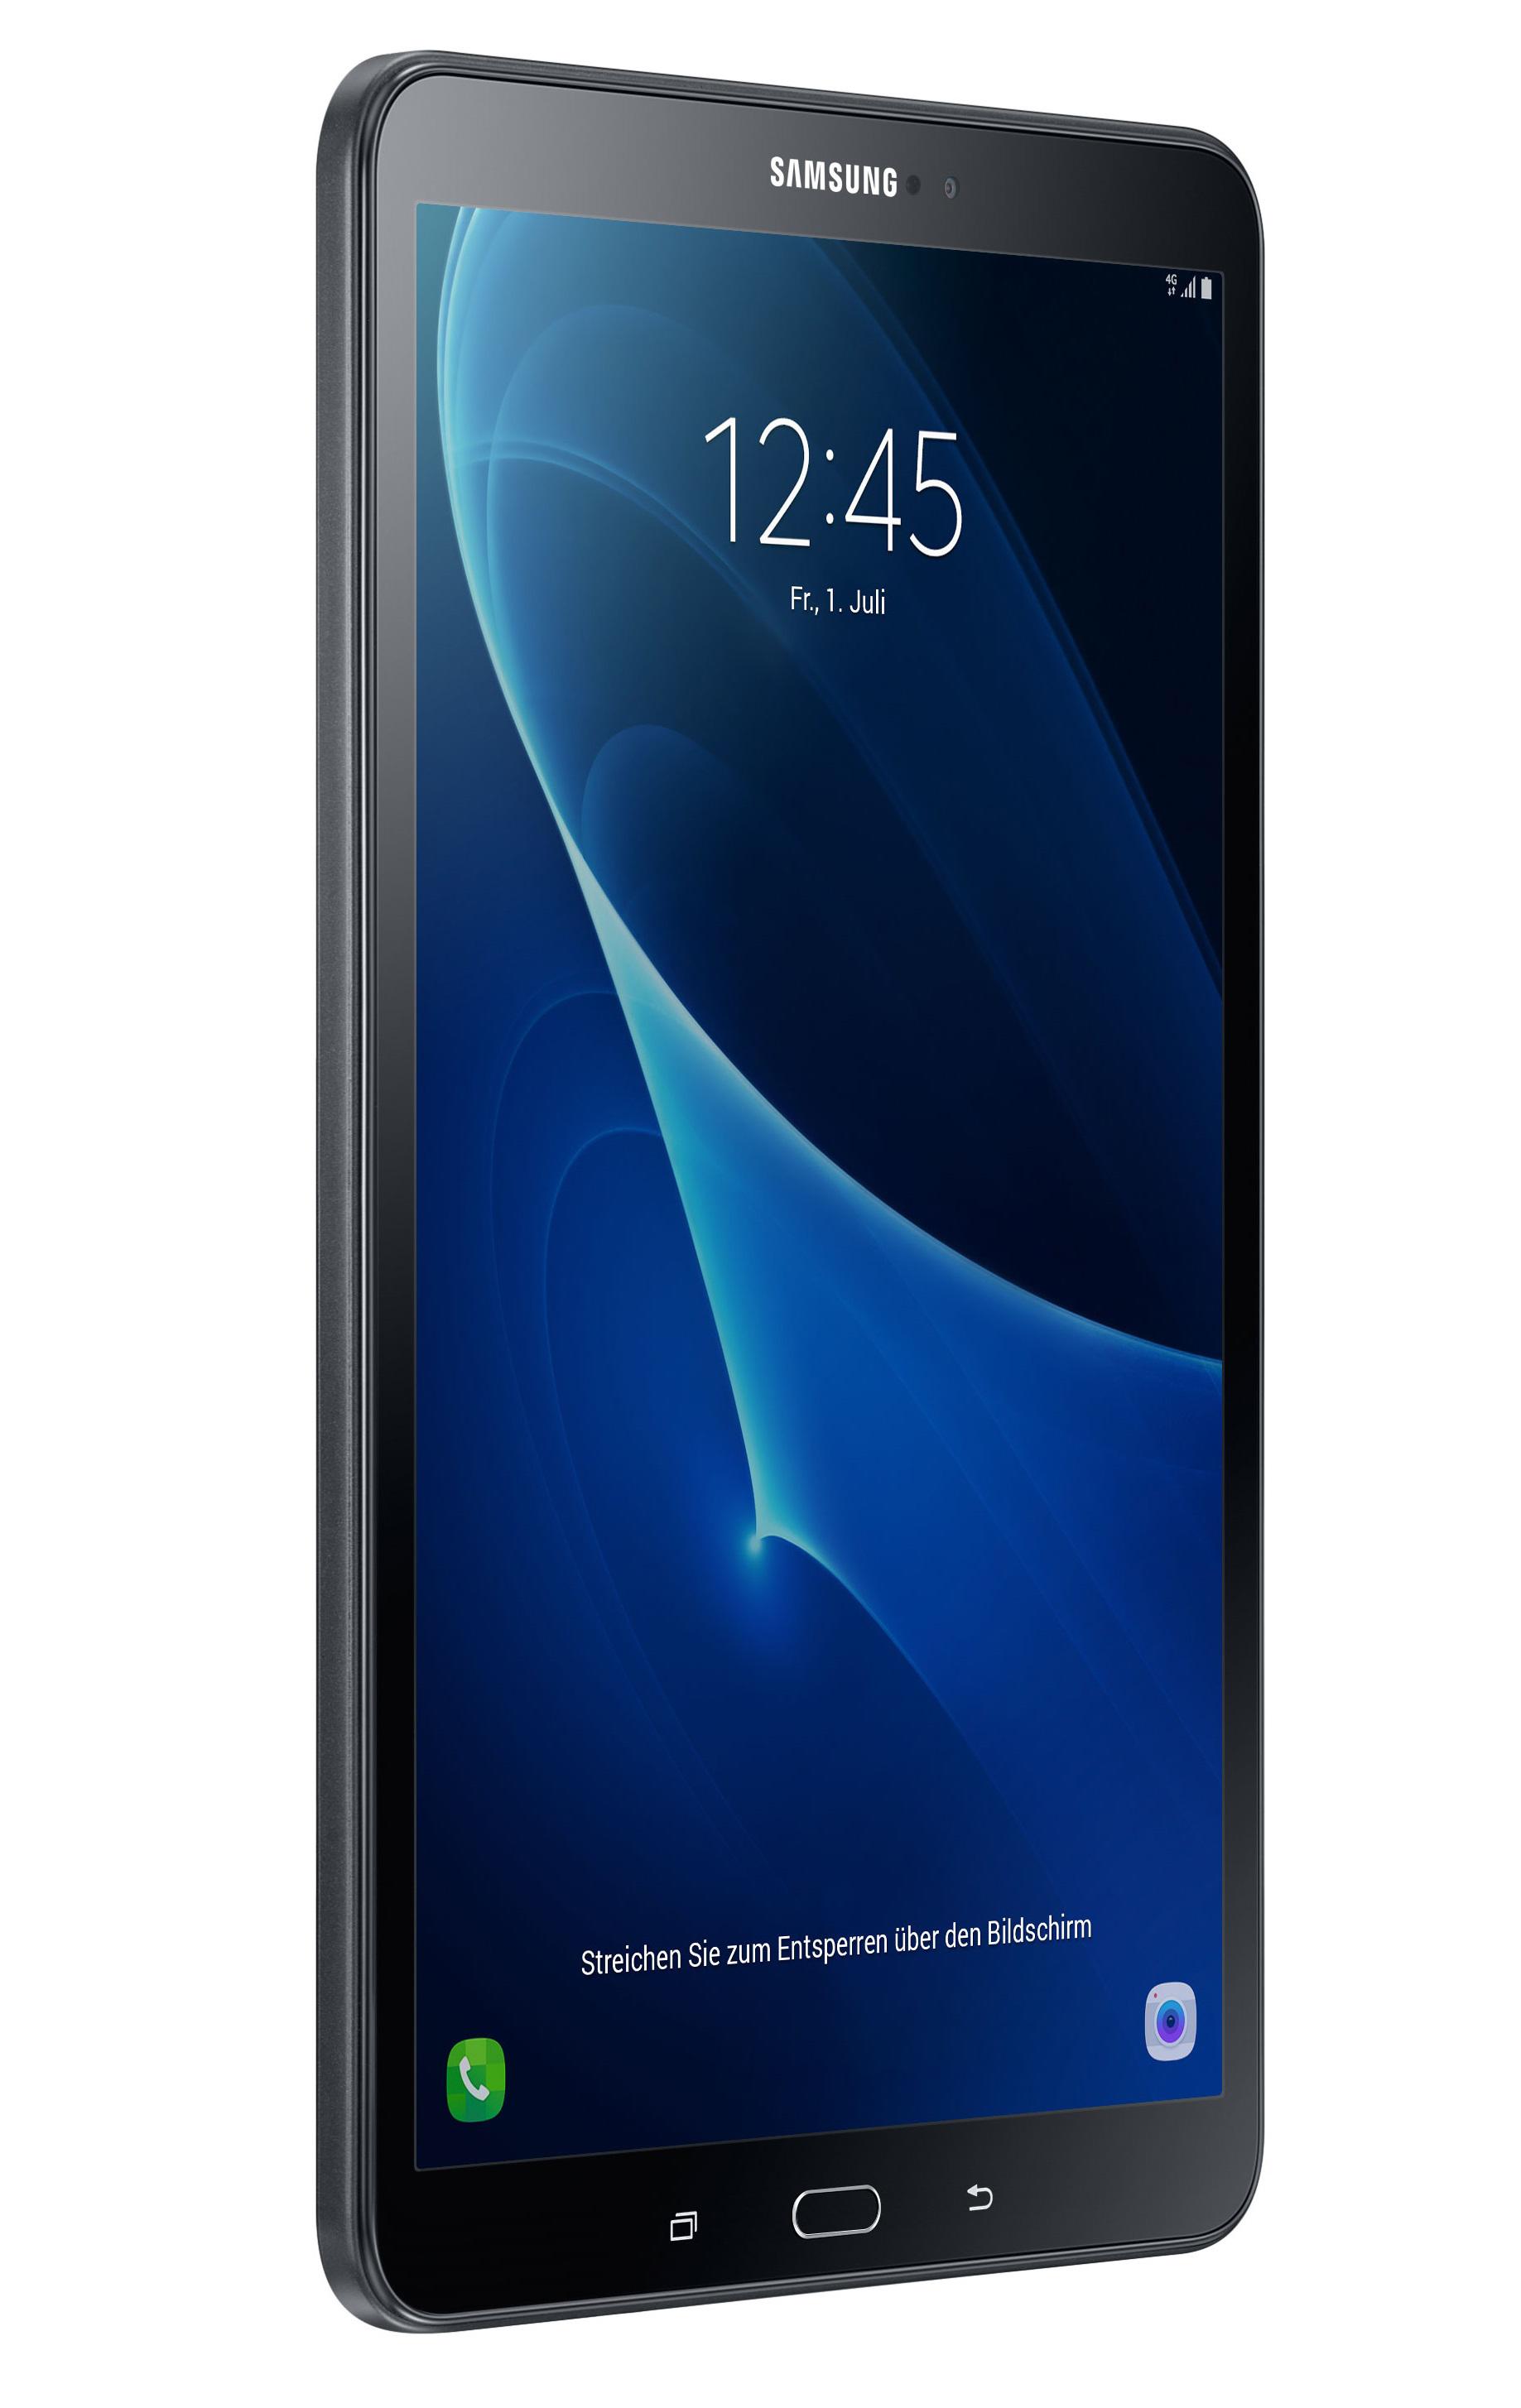 Samsung Galaxy Tab A 10.1 (2016): caracterÃ­sticas